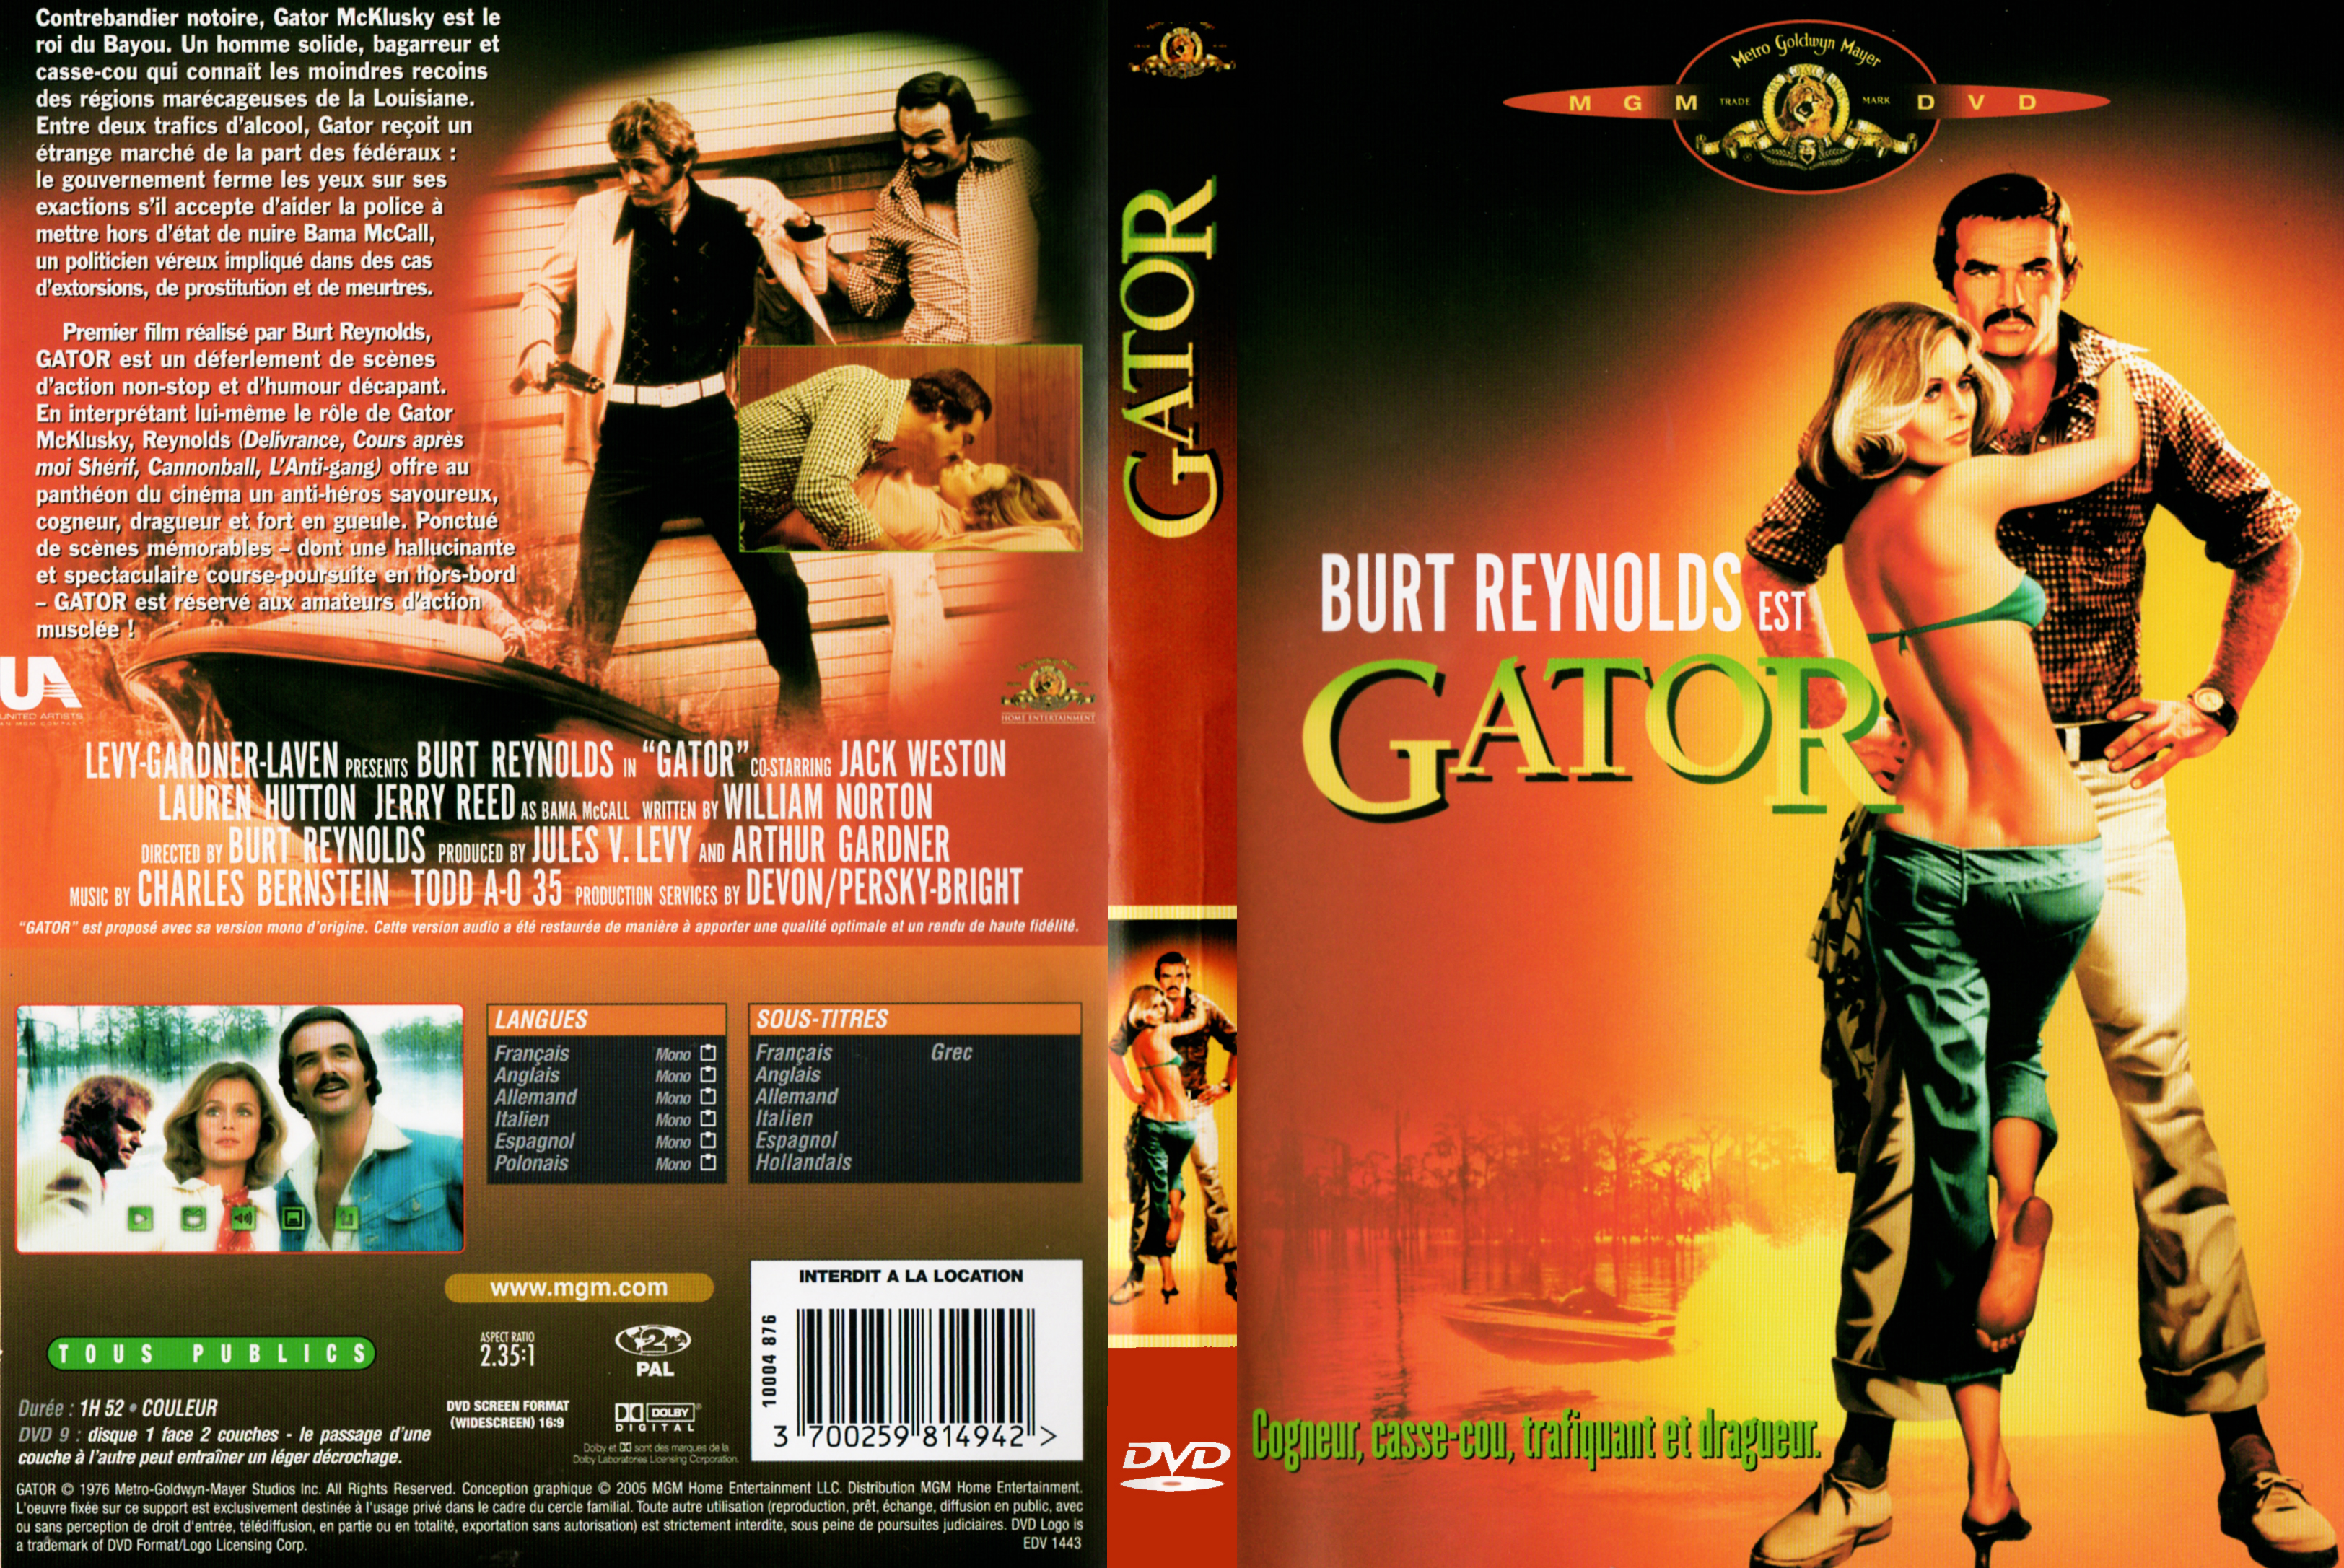 Jaquette DVD Gator